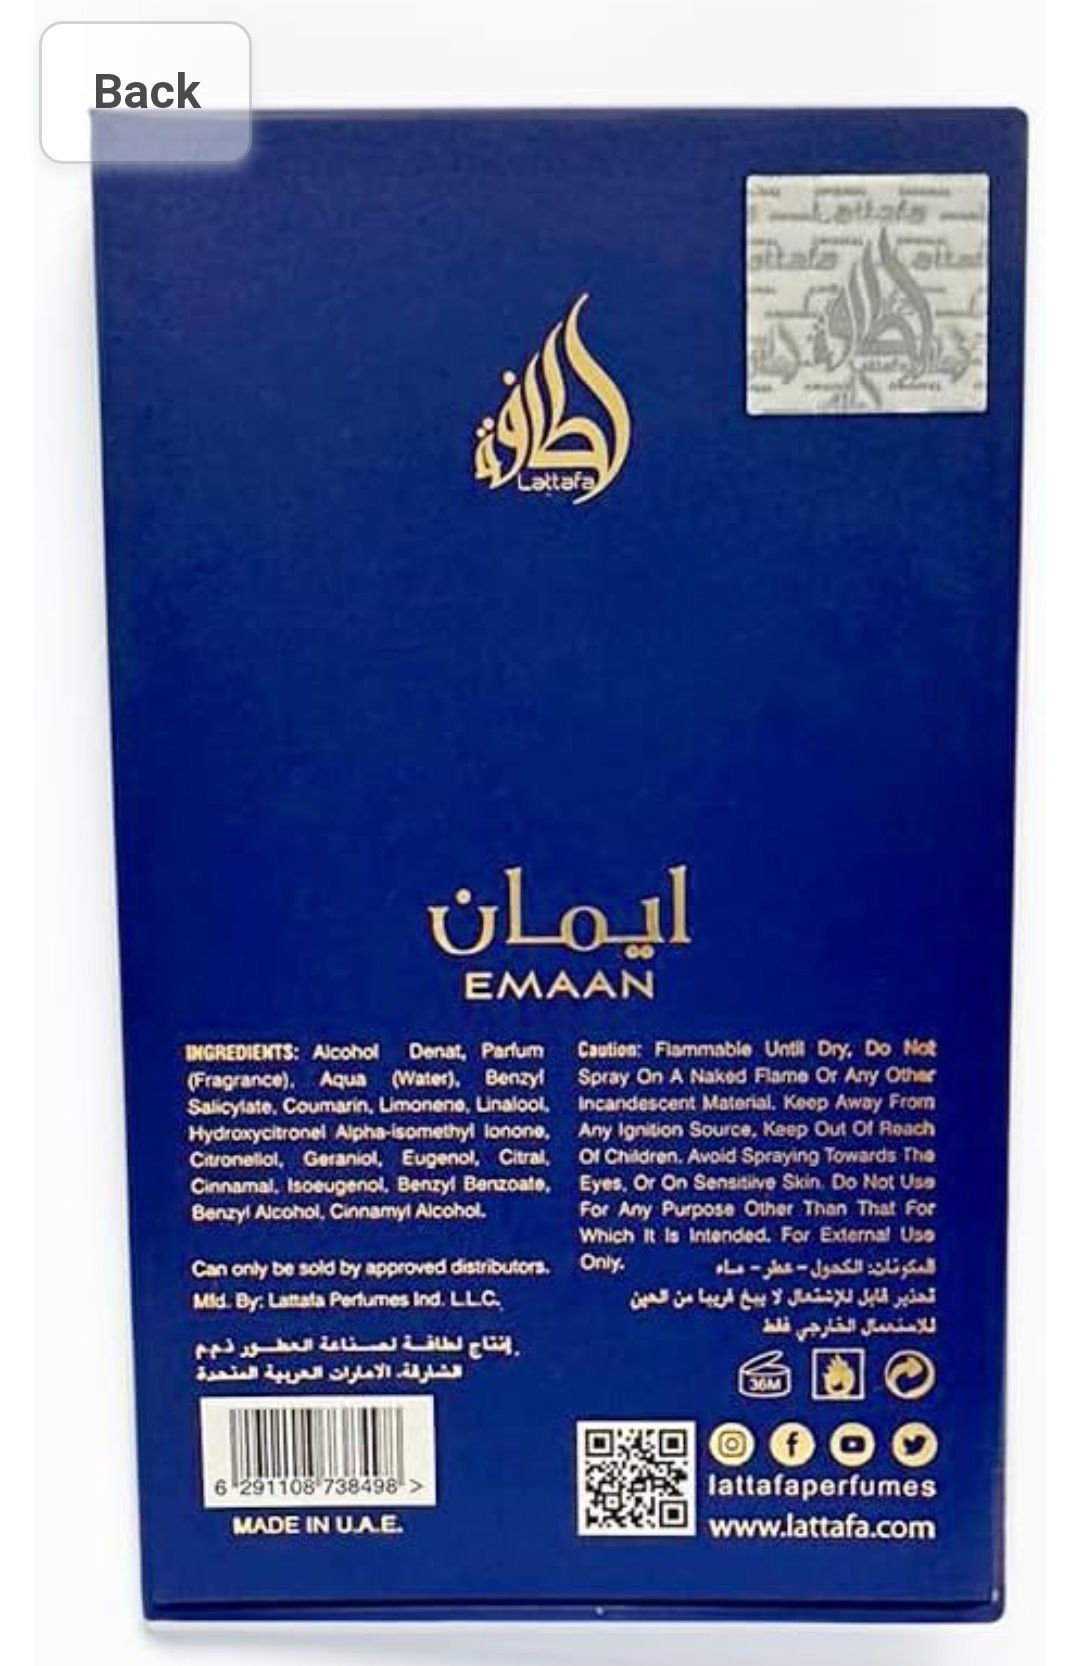 Lattafa Emaan unisex Arab parfume atir